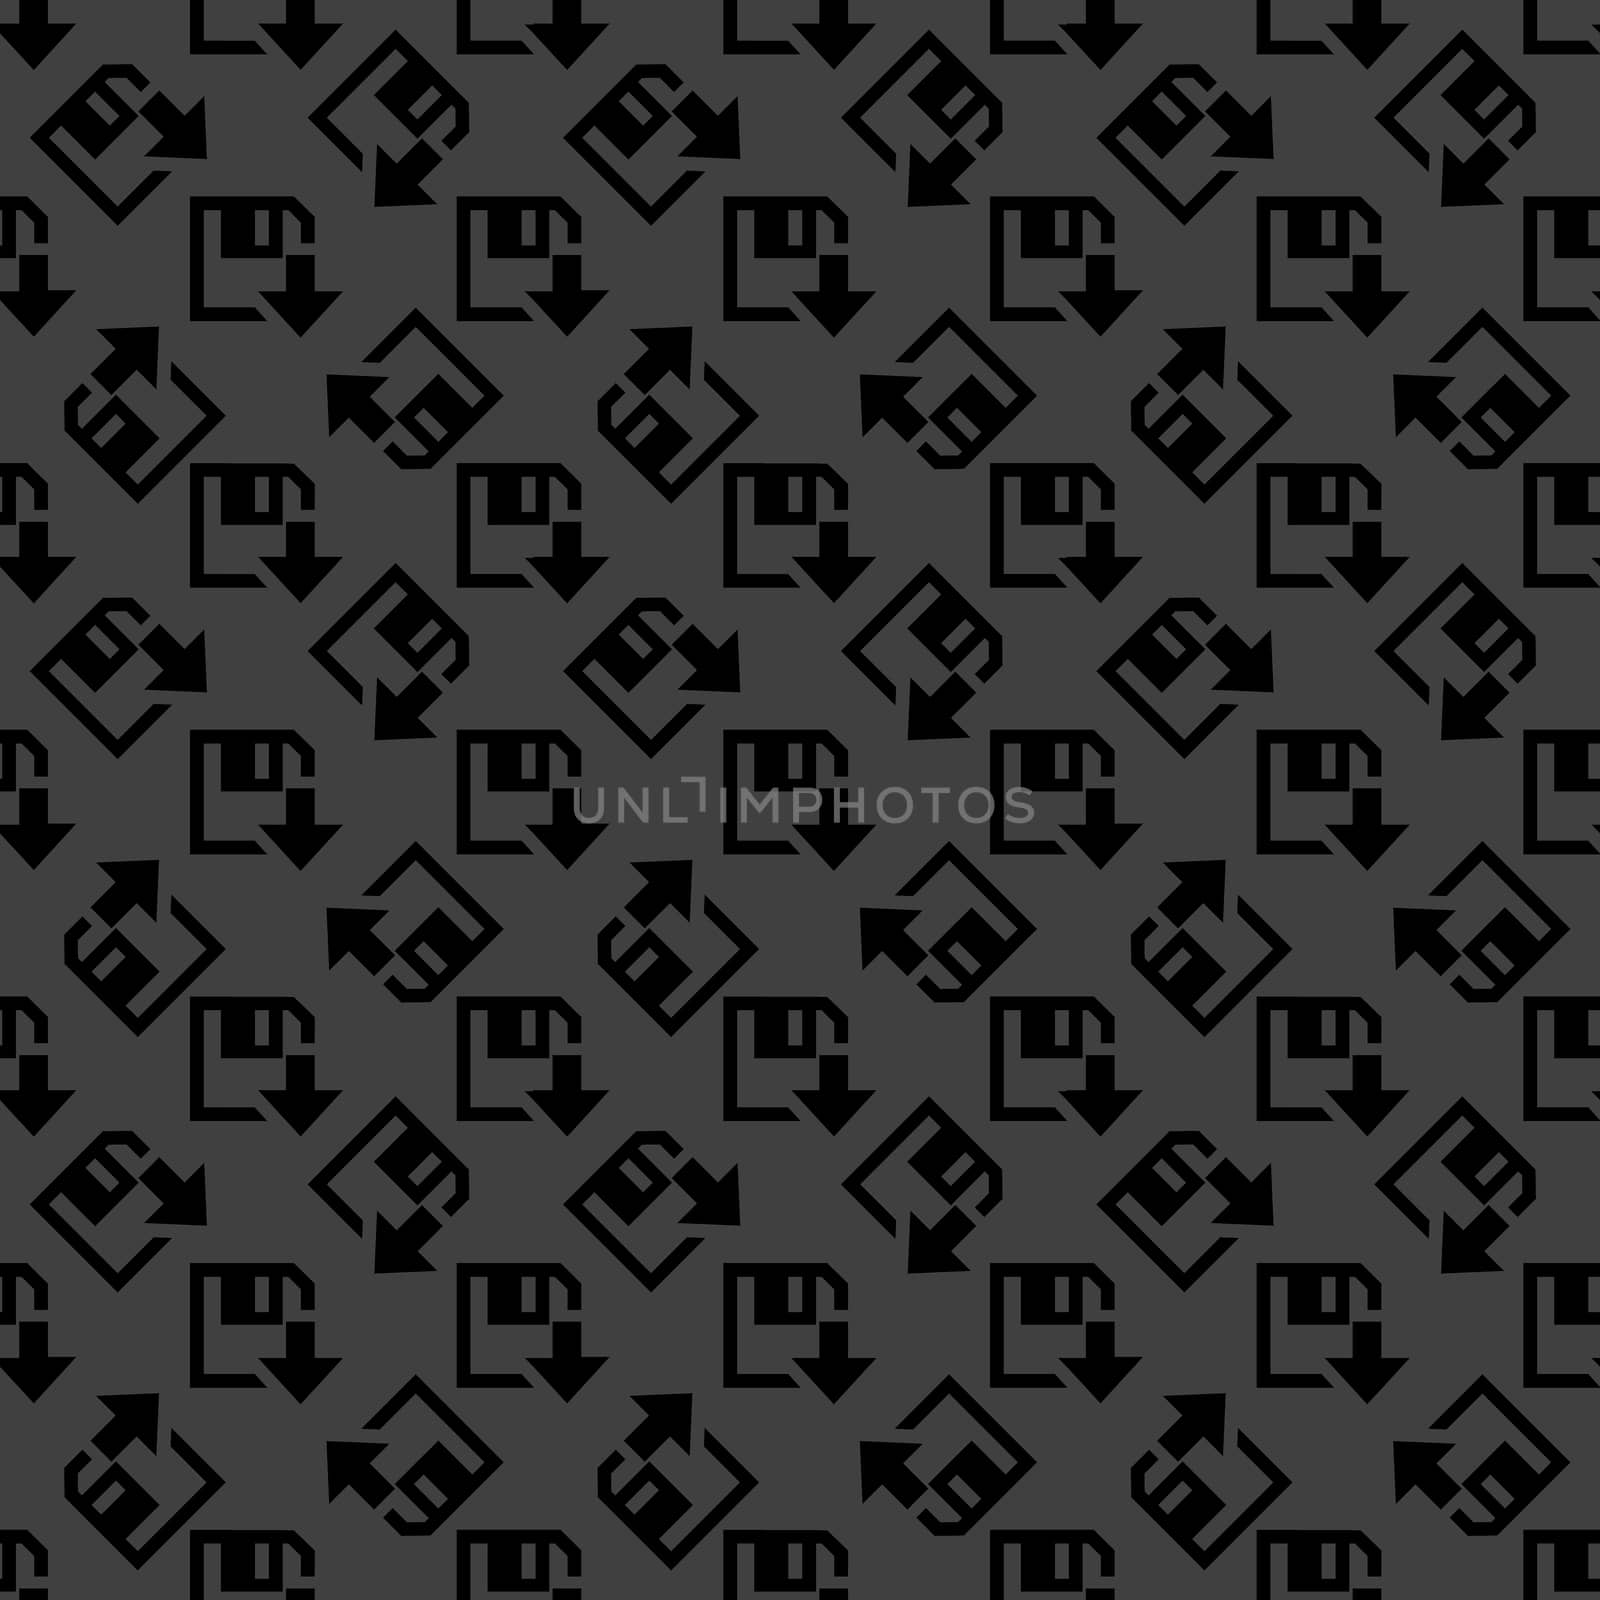 floppy disk download web icon. flat design. Seamless gray pattern. by serhii_lohvyniuk